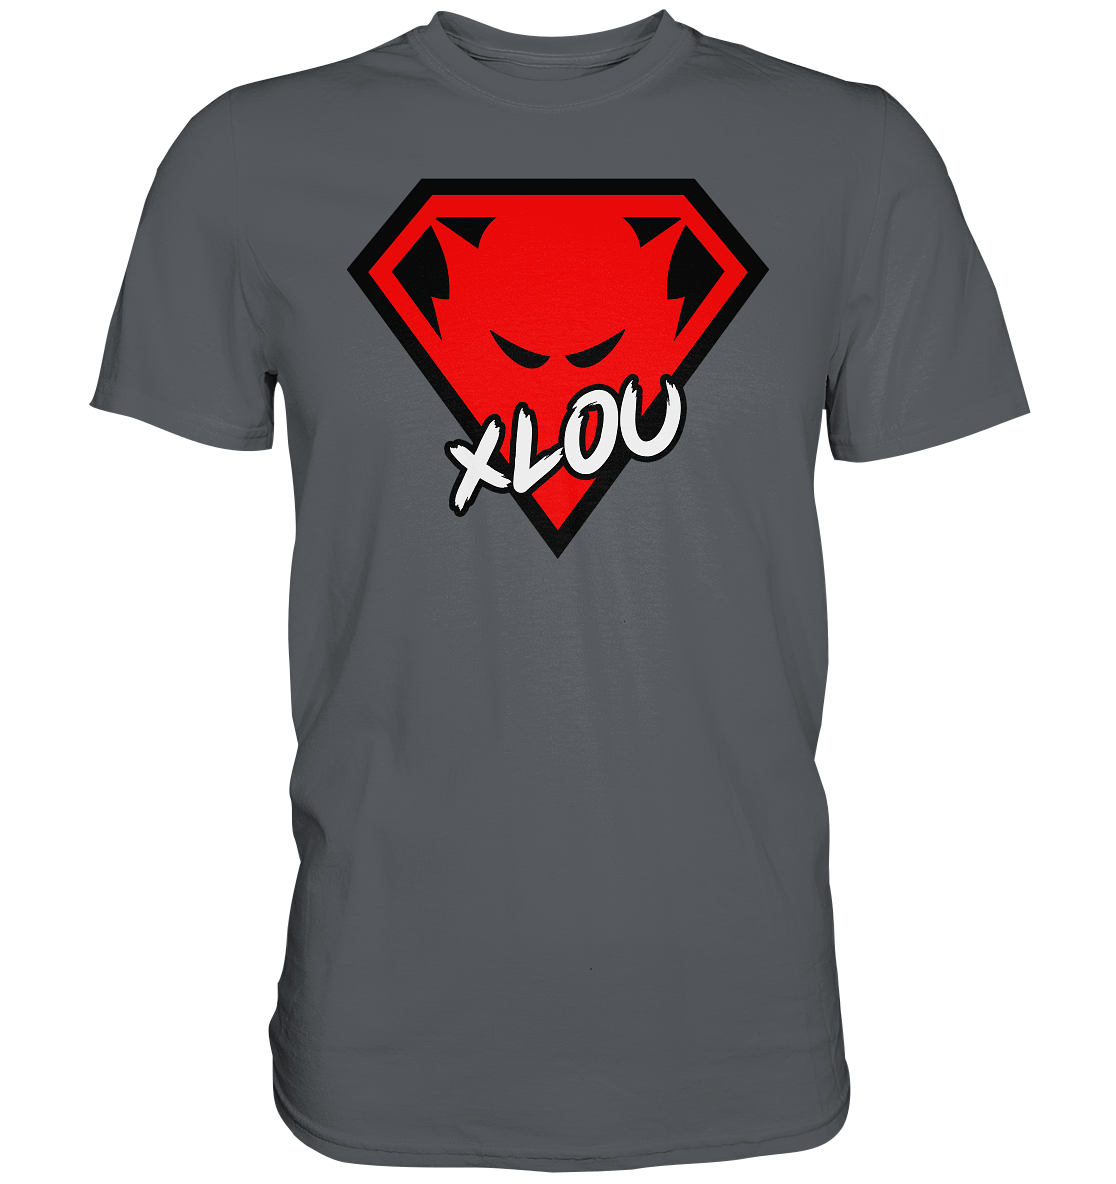 XLOU - Basic Shirt